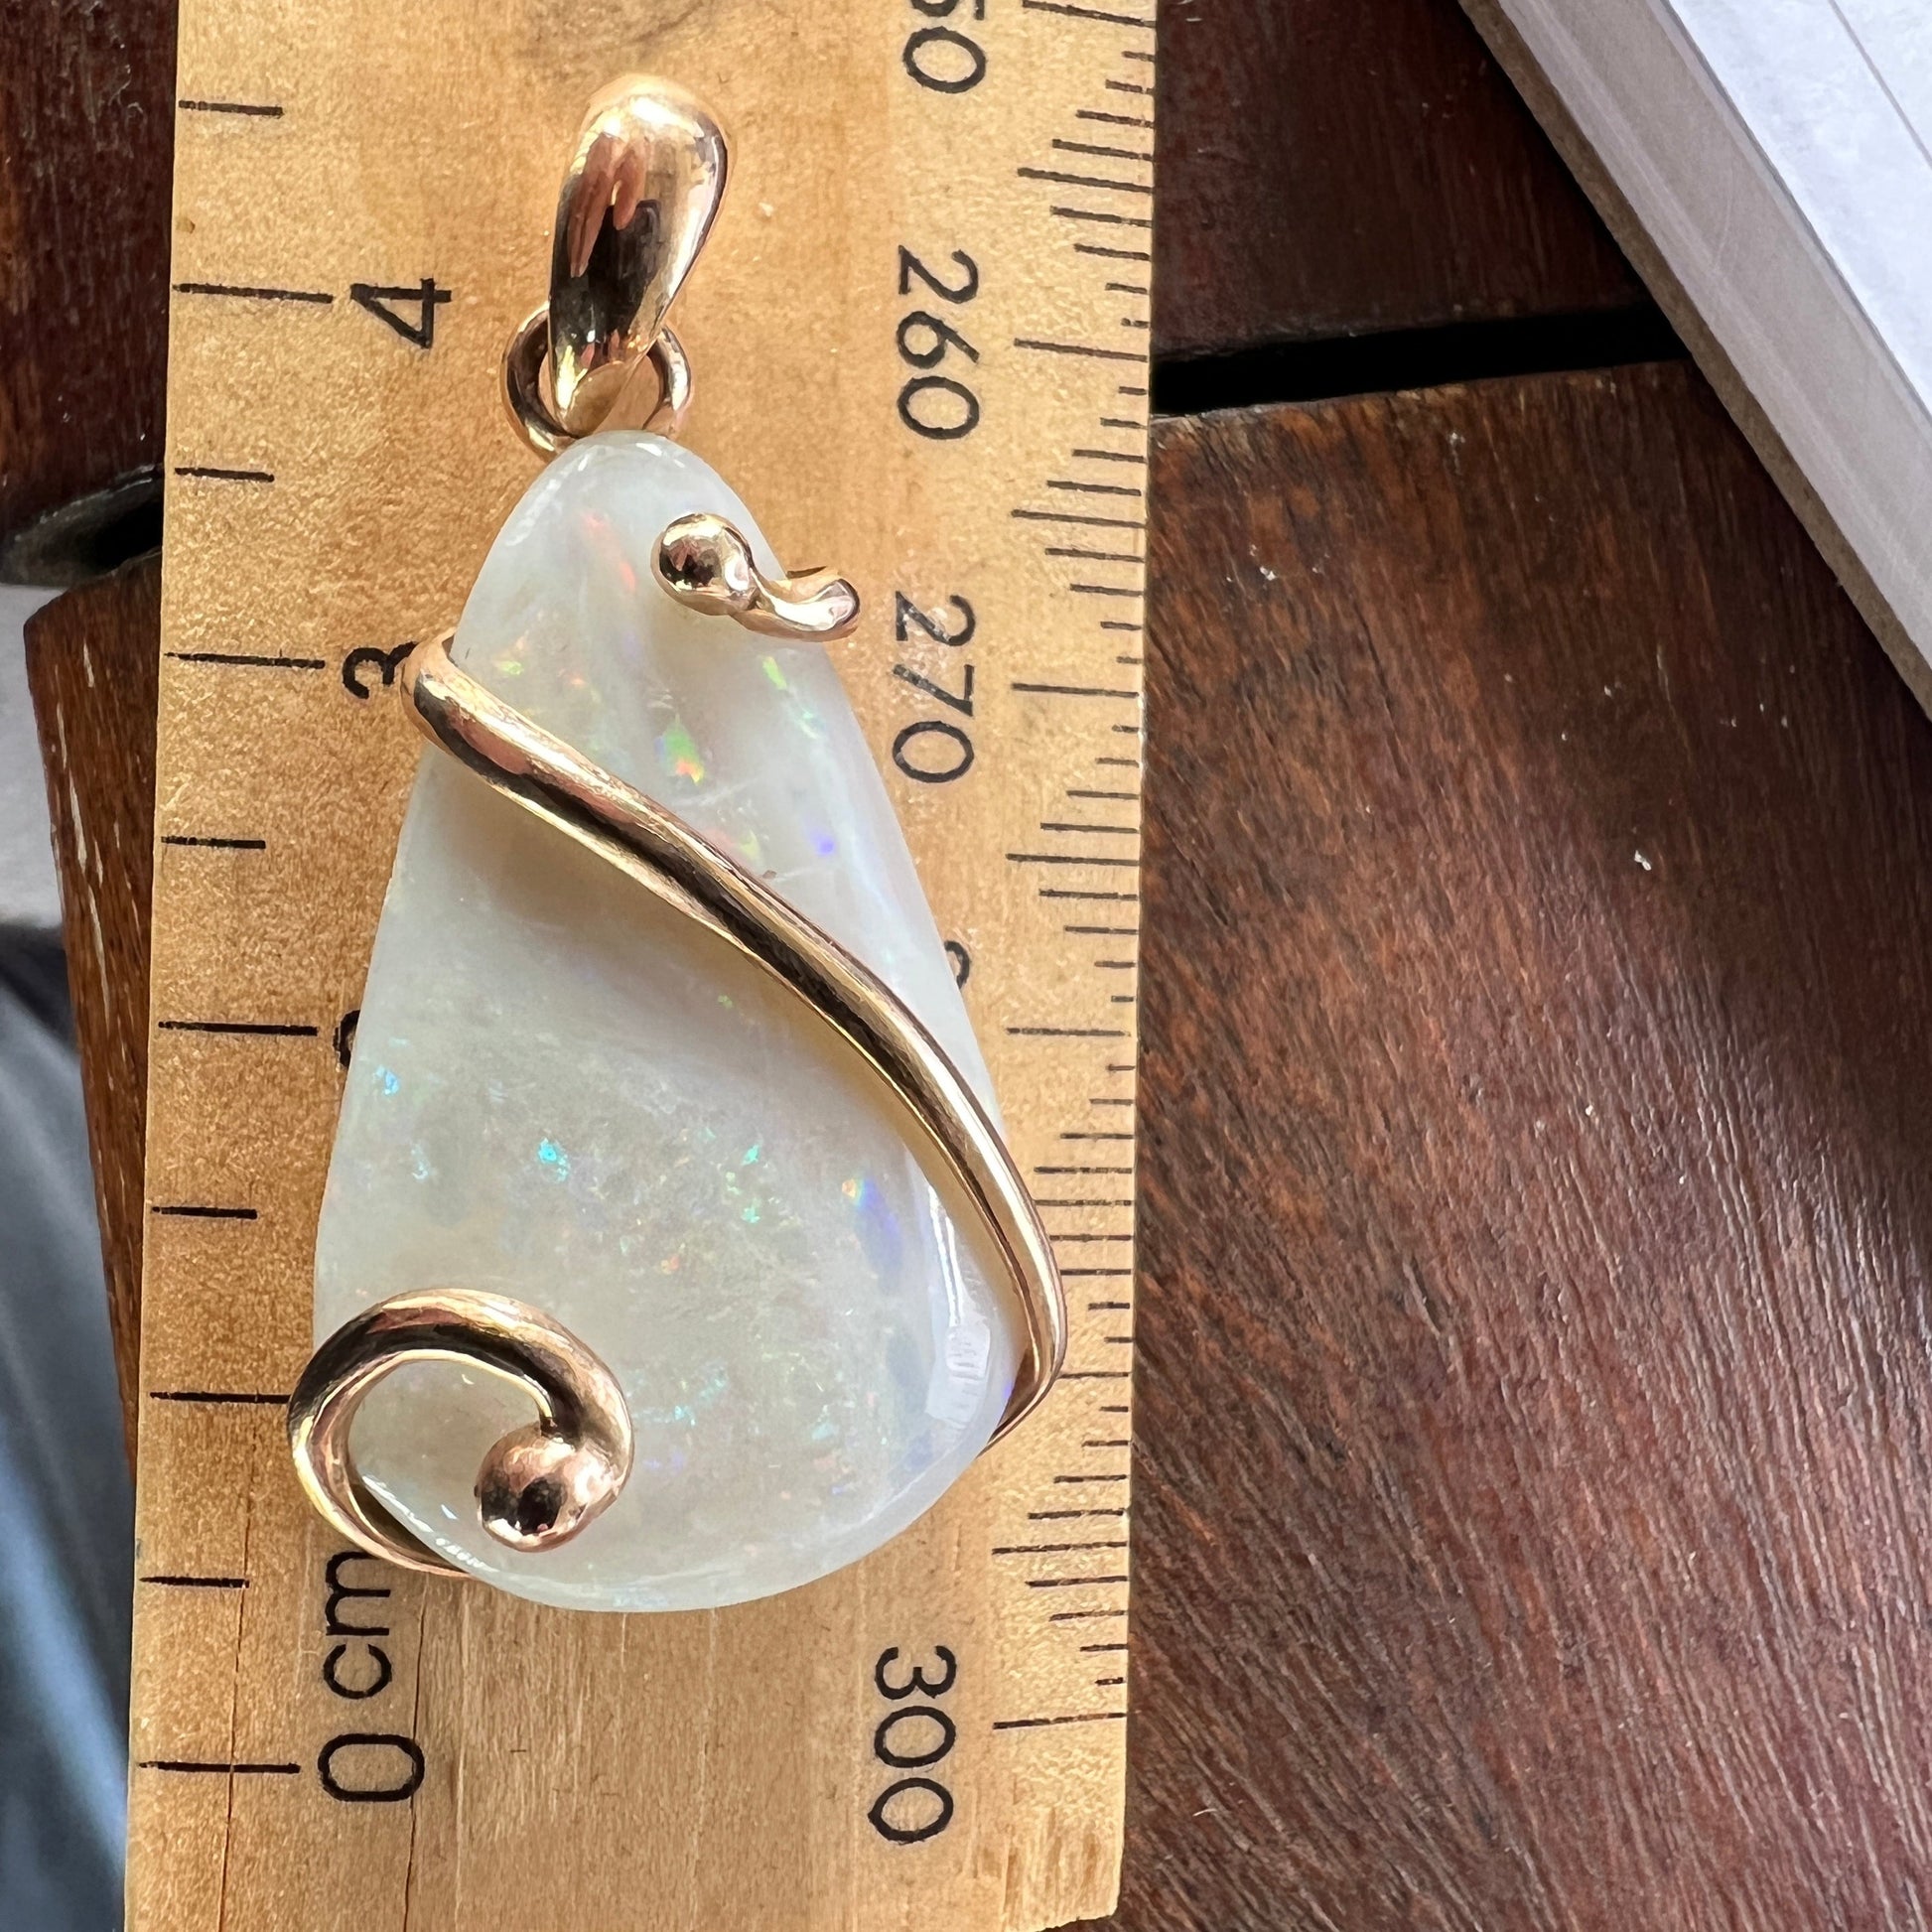 Beautiful solid Australian opal set in a unique 18ct gold design. A beautiful pendant.